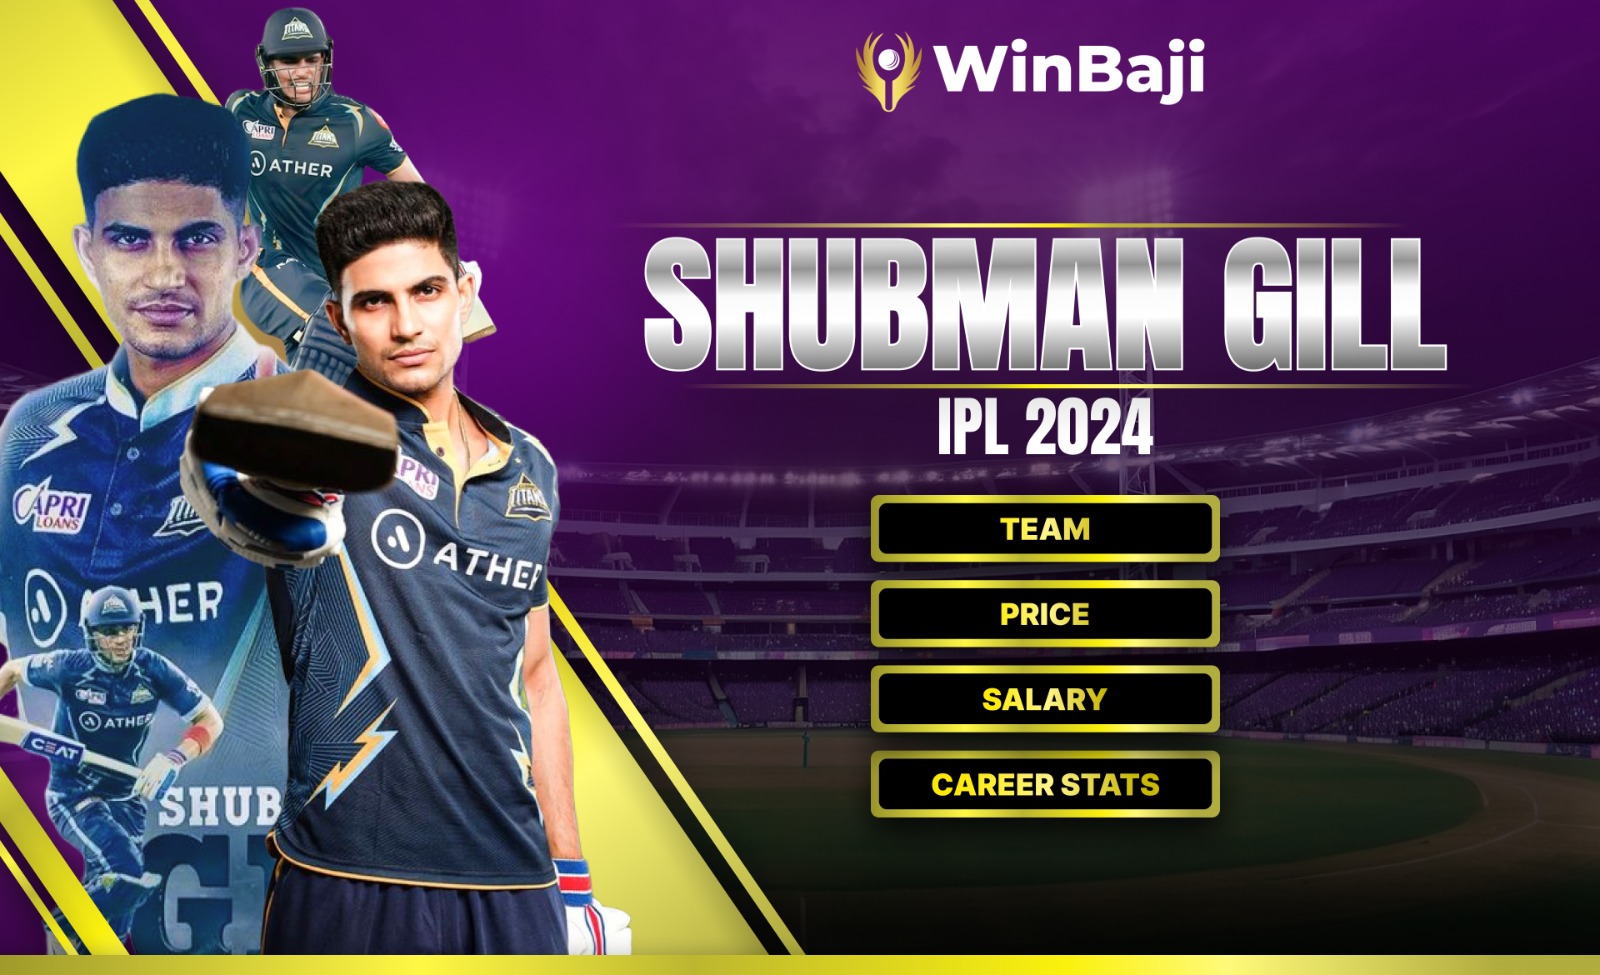 Shubman Gill IPL 2024 Team, Price, Career Stats & Salary